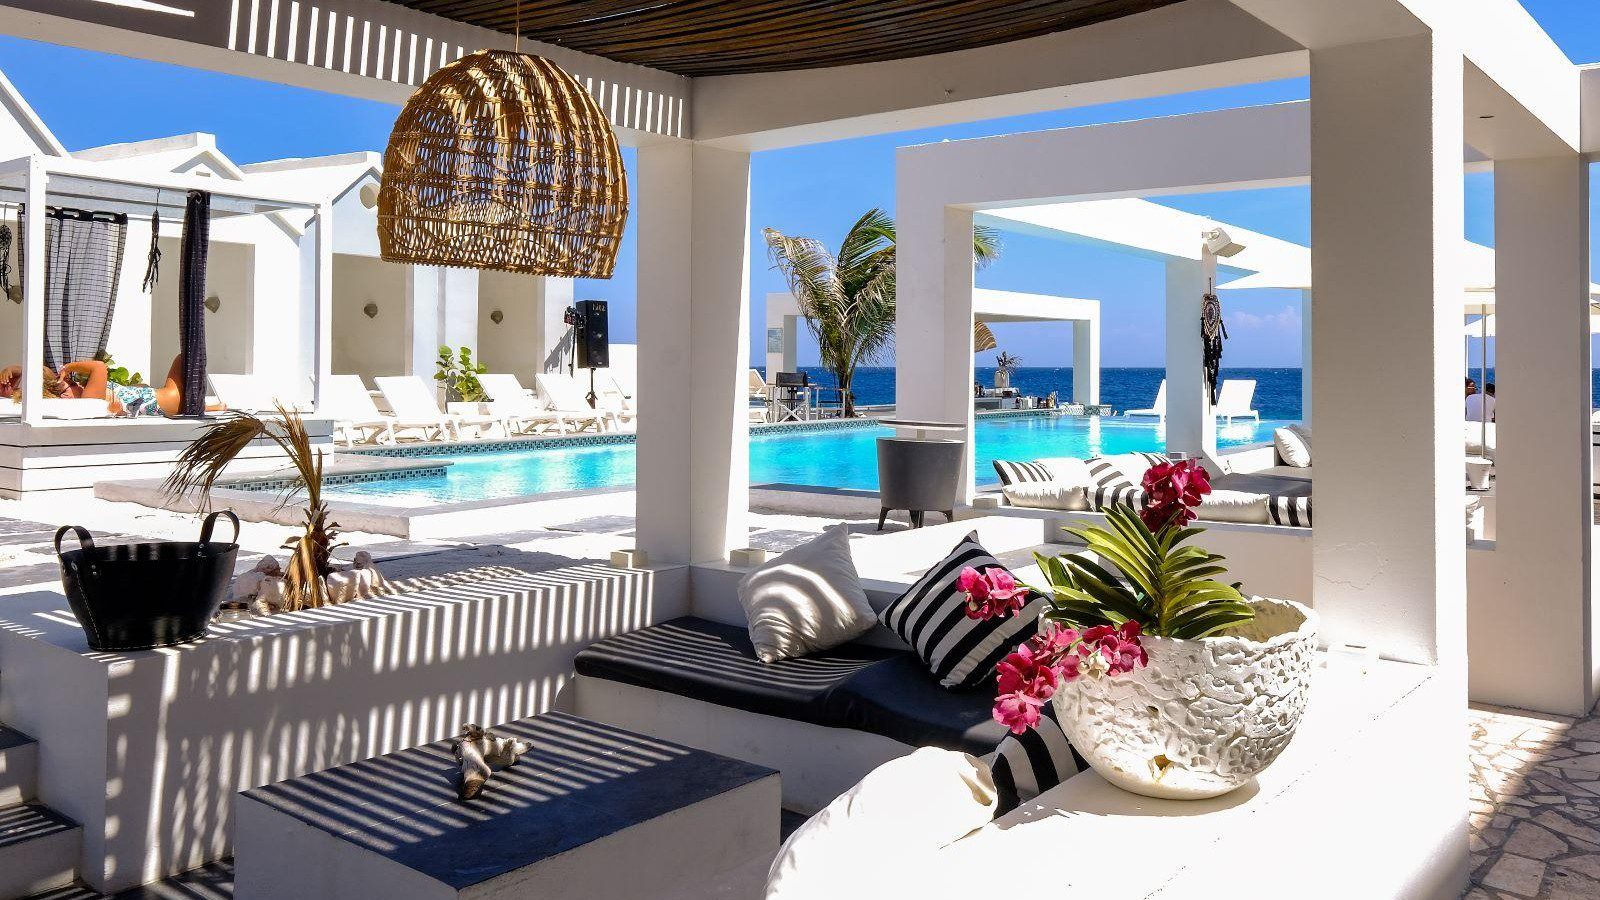 Saint Tropez Boutique Hotel Curacao - Infinity Pool